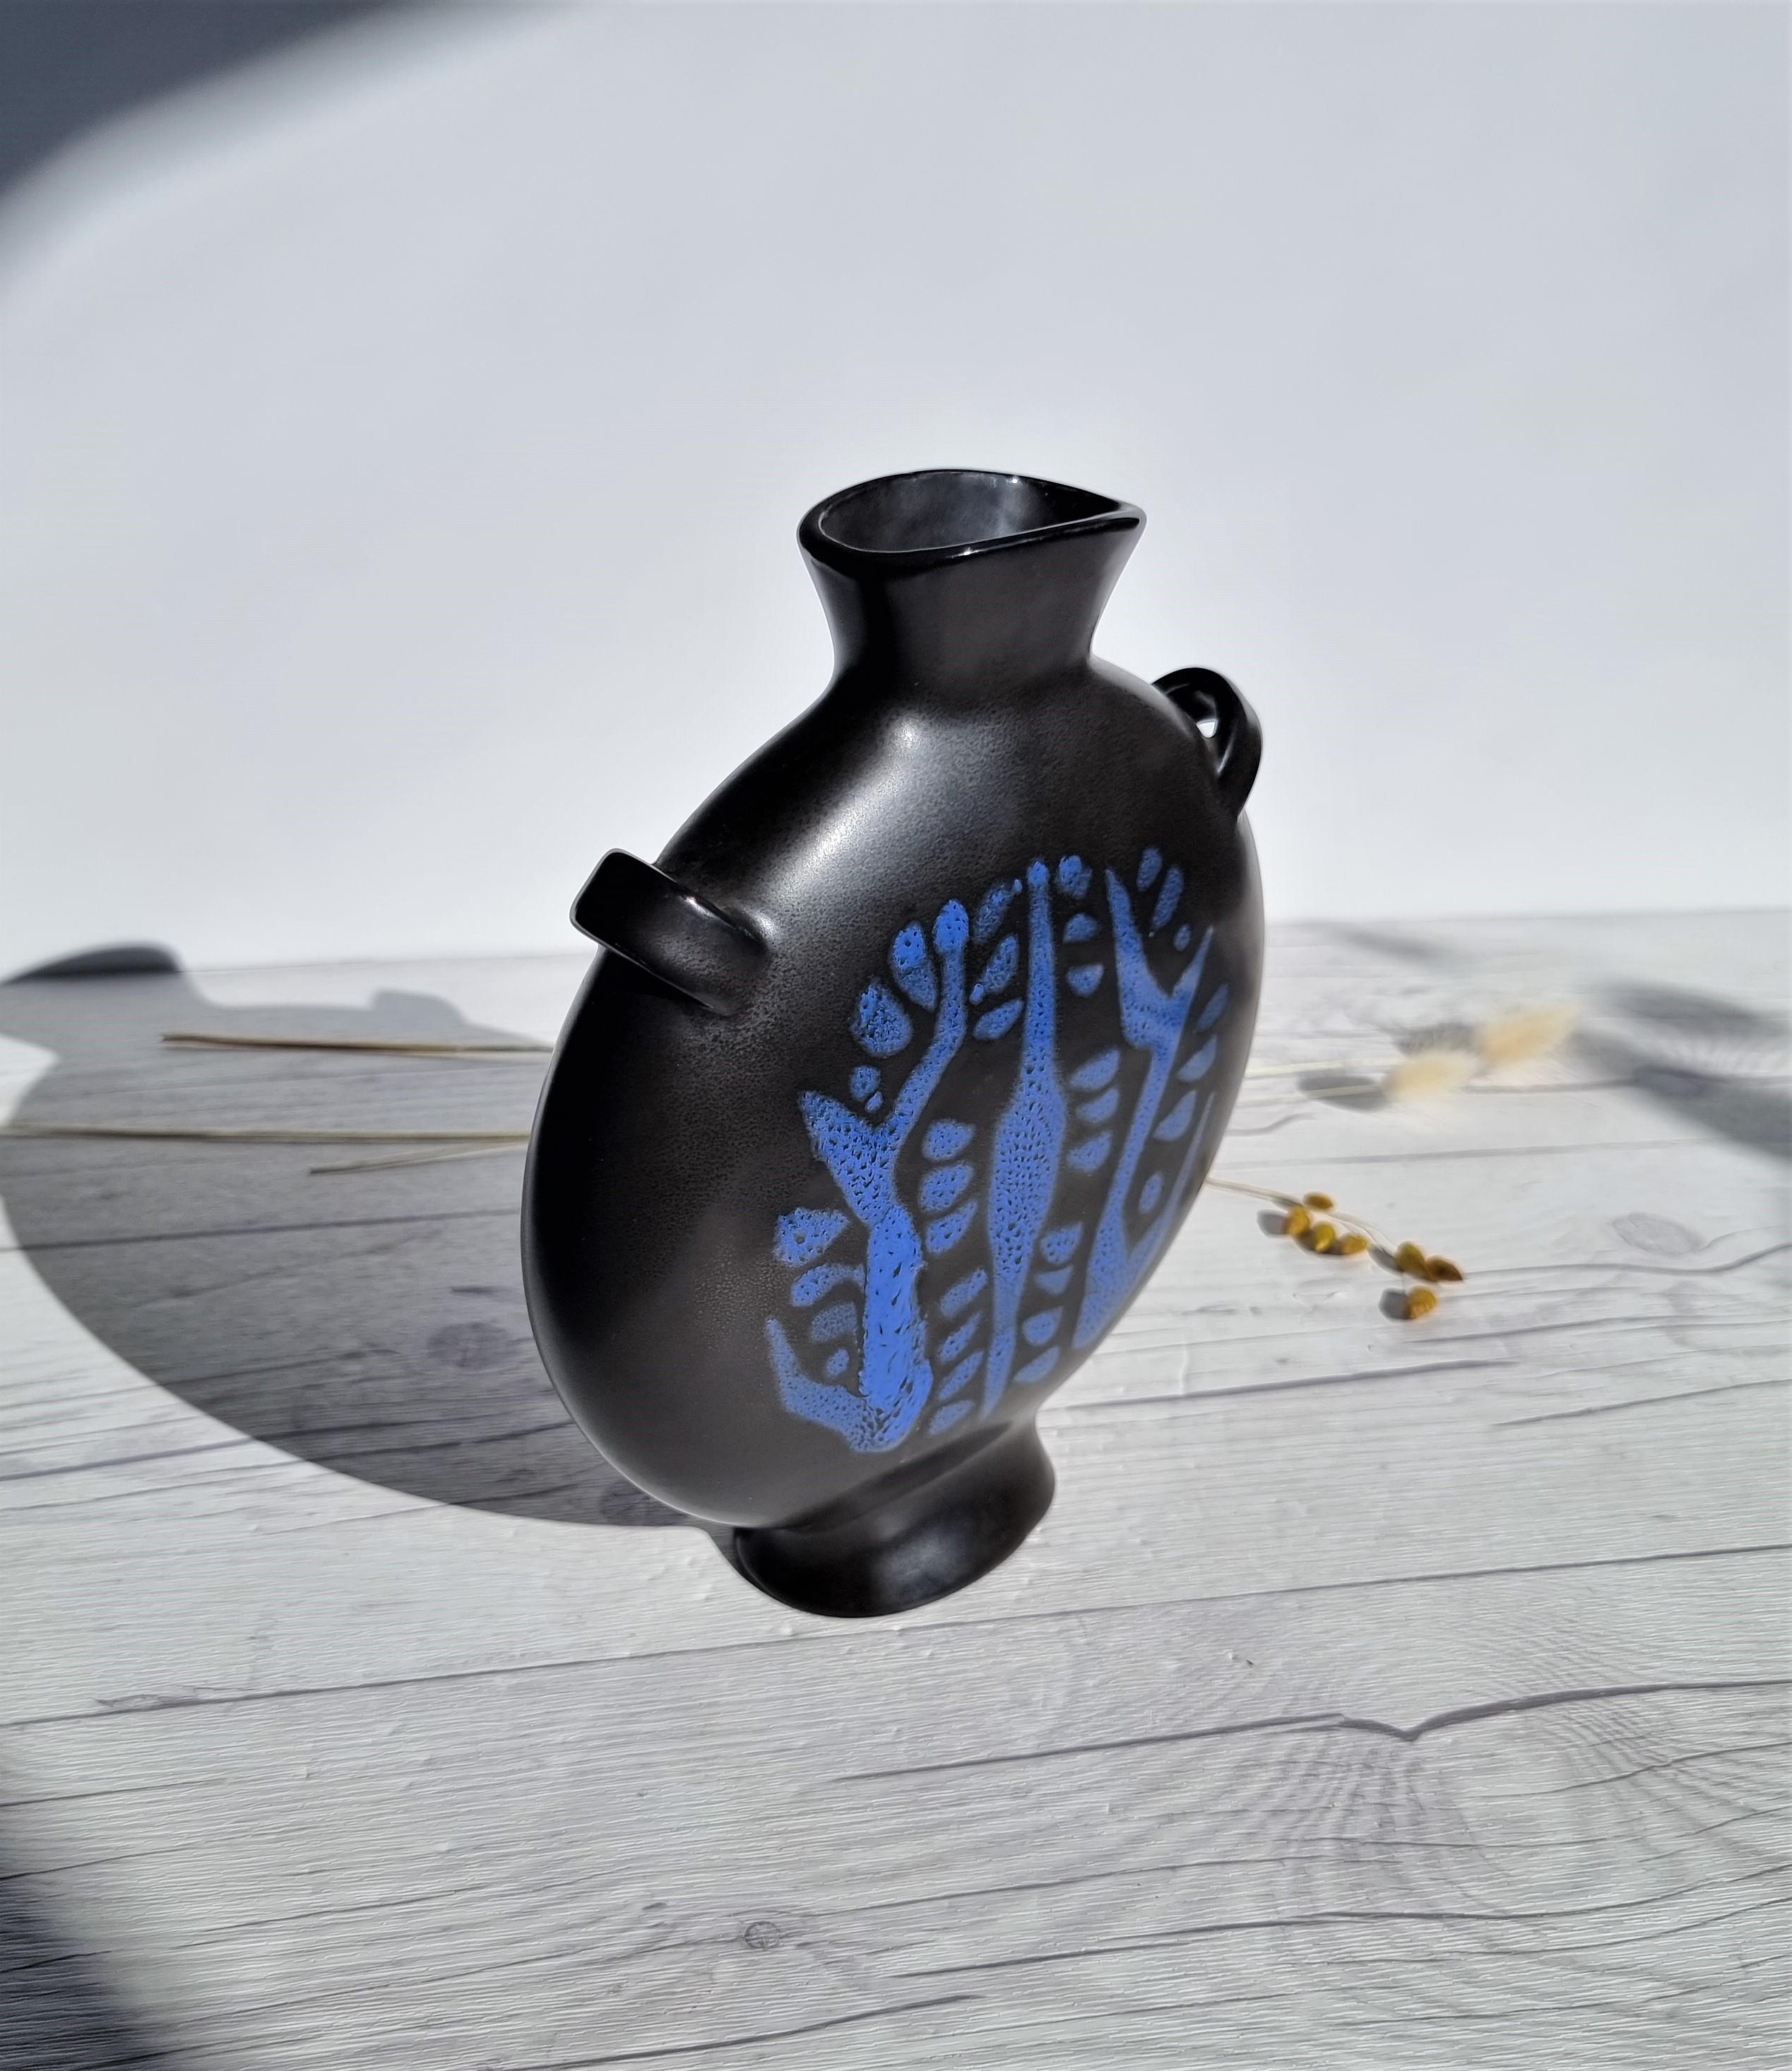 Lillemor Mannerheim for Gefle Keramik, Singoalla Series, Moon Flask Vase 1